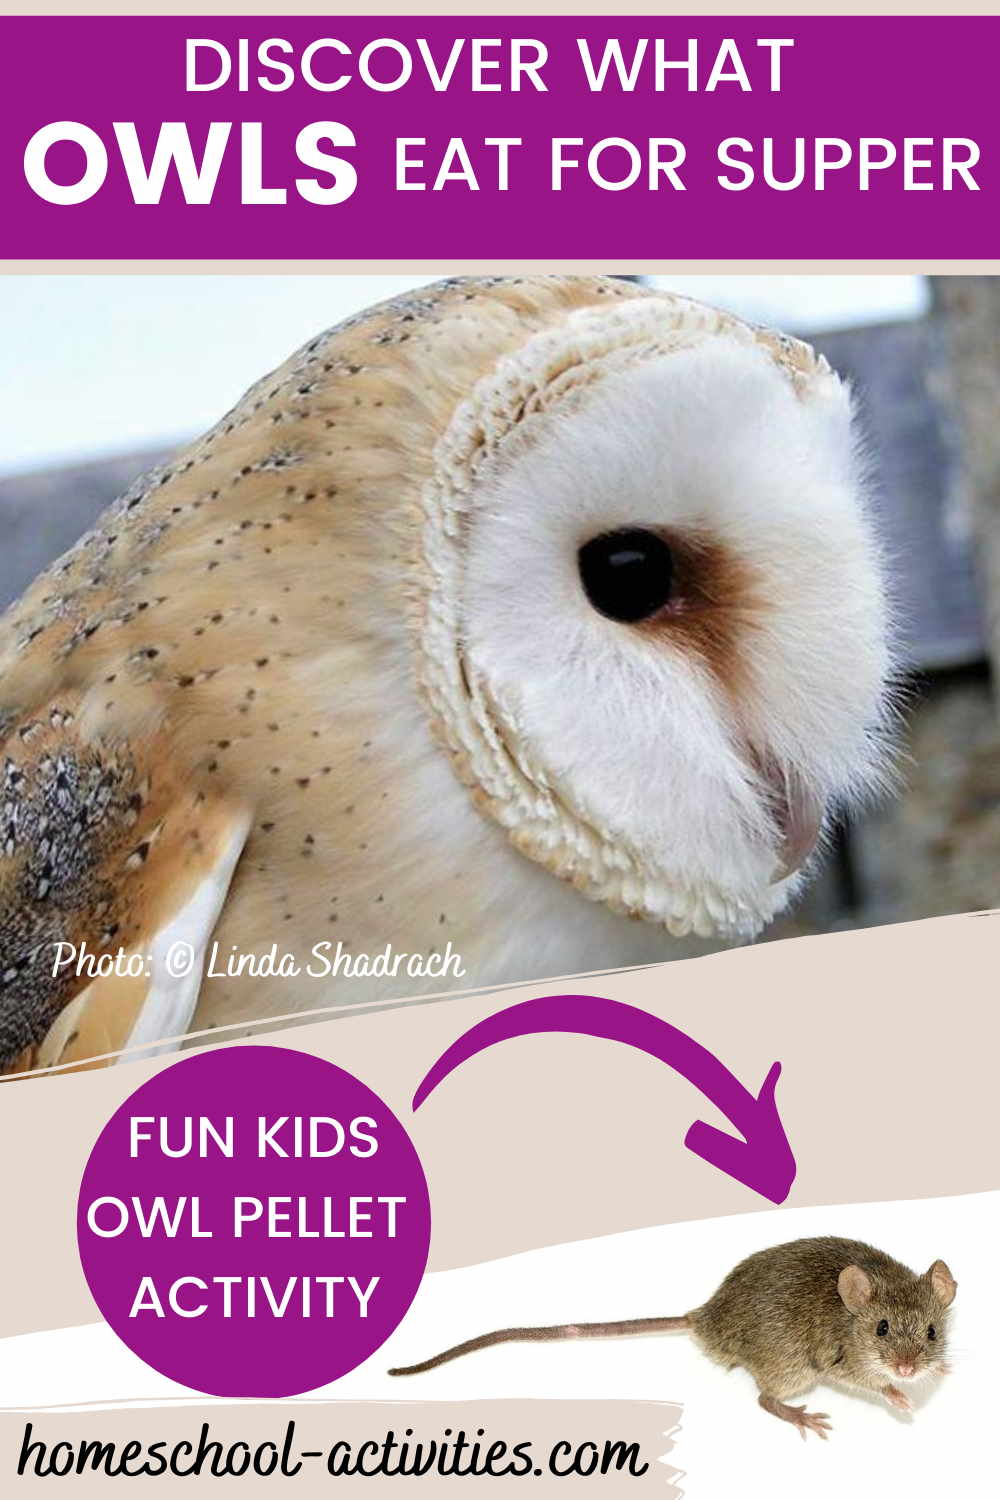 Owl pellet dissection activities for kids